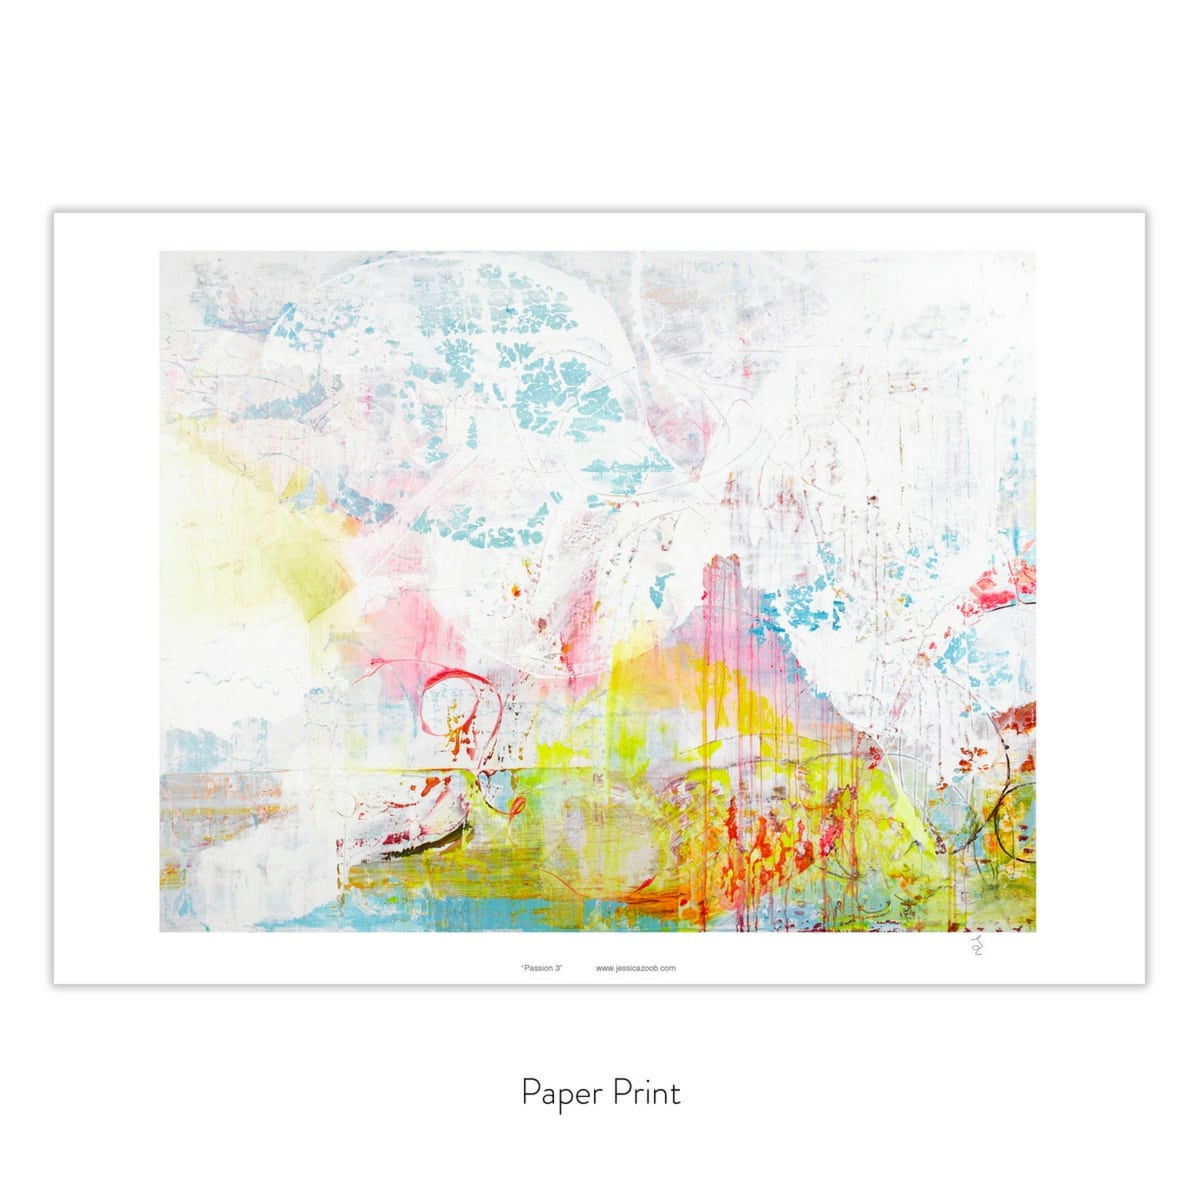 Jessica Zoob Contemporary fine art print - Passion 3 in paper print format